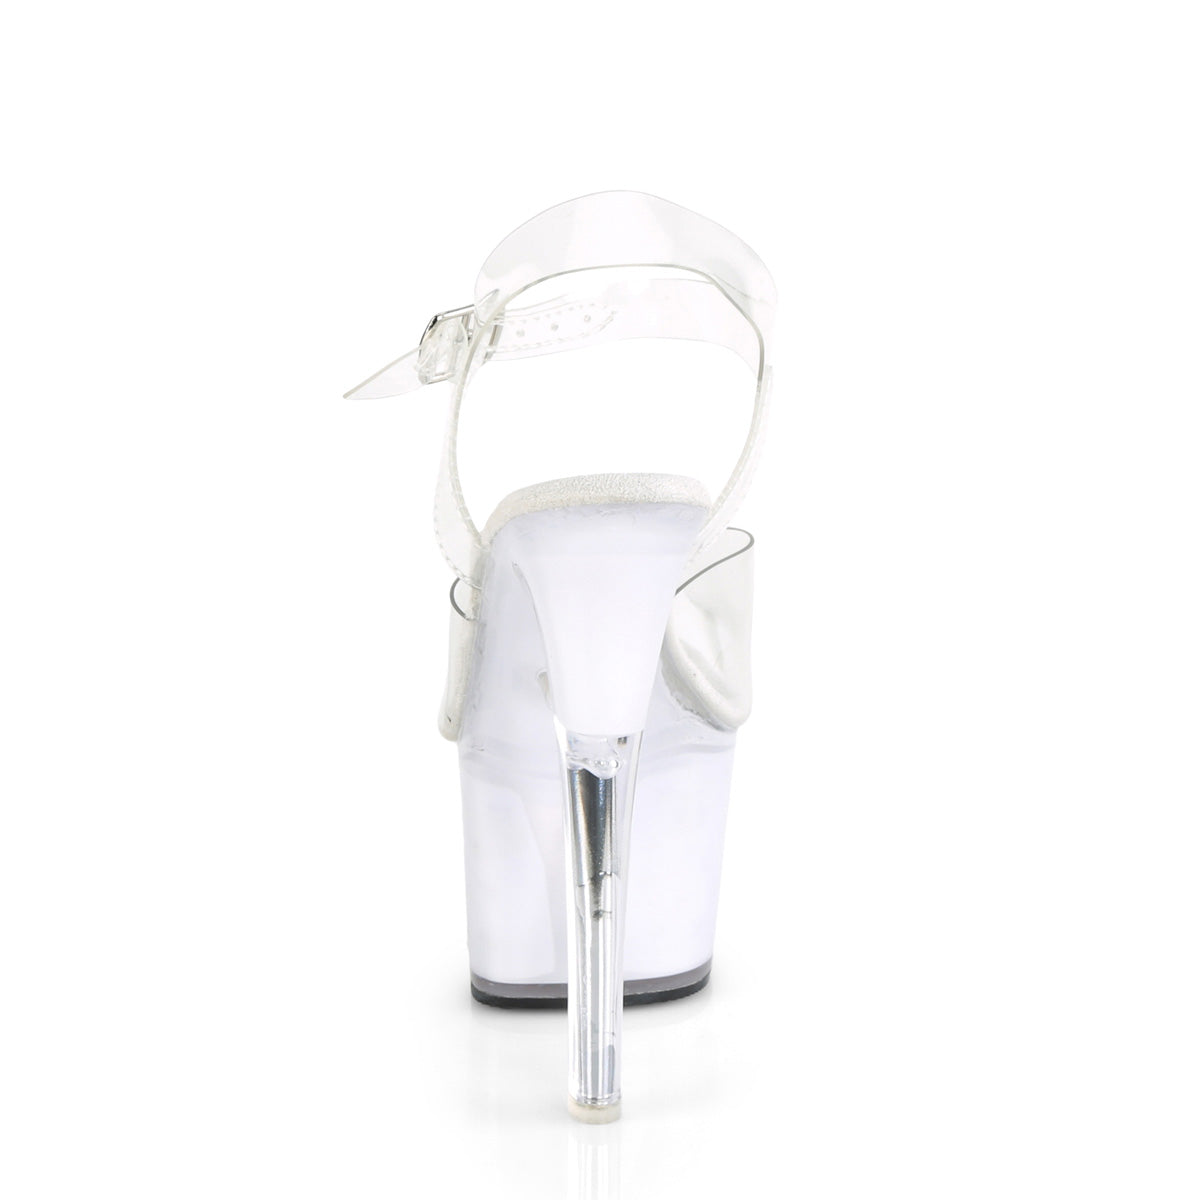 ECHOLITE-708 7" Heel Clear White Glow Pole Dancer Platforms-Pleaser- Sexy Shoes Fetish Footwear